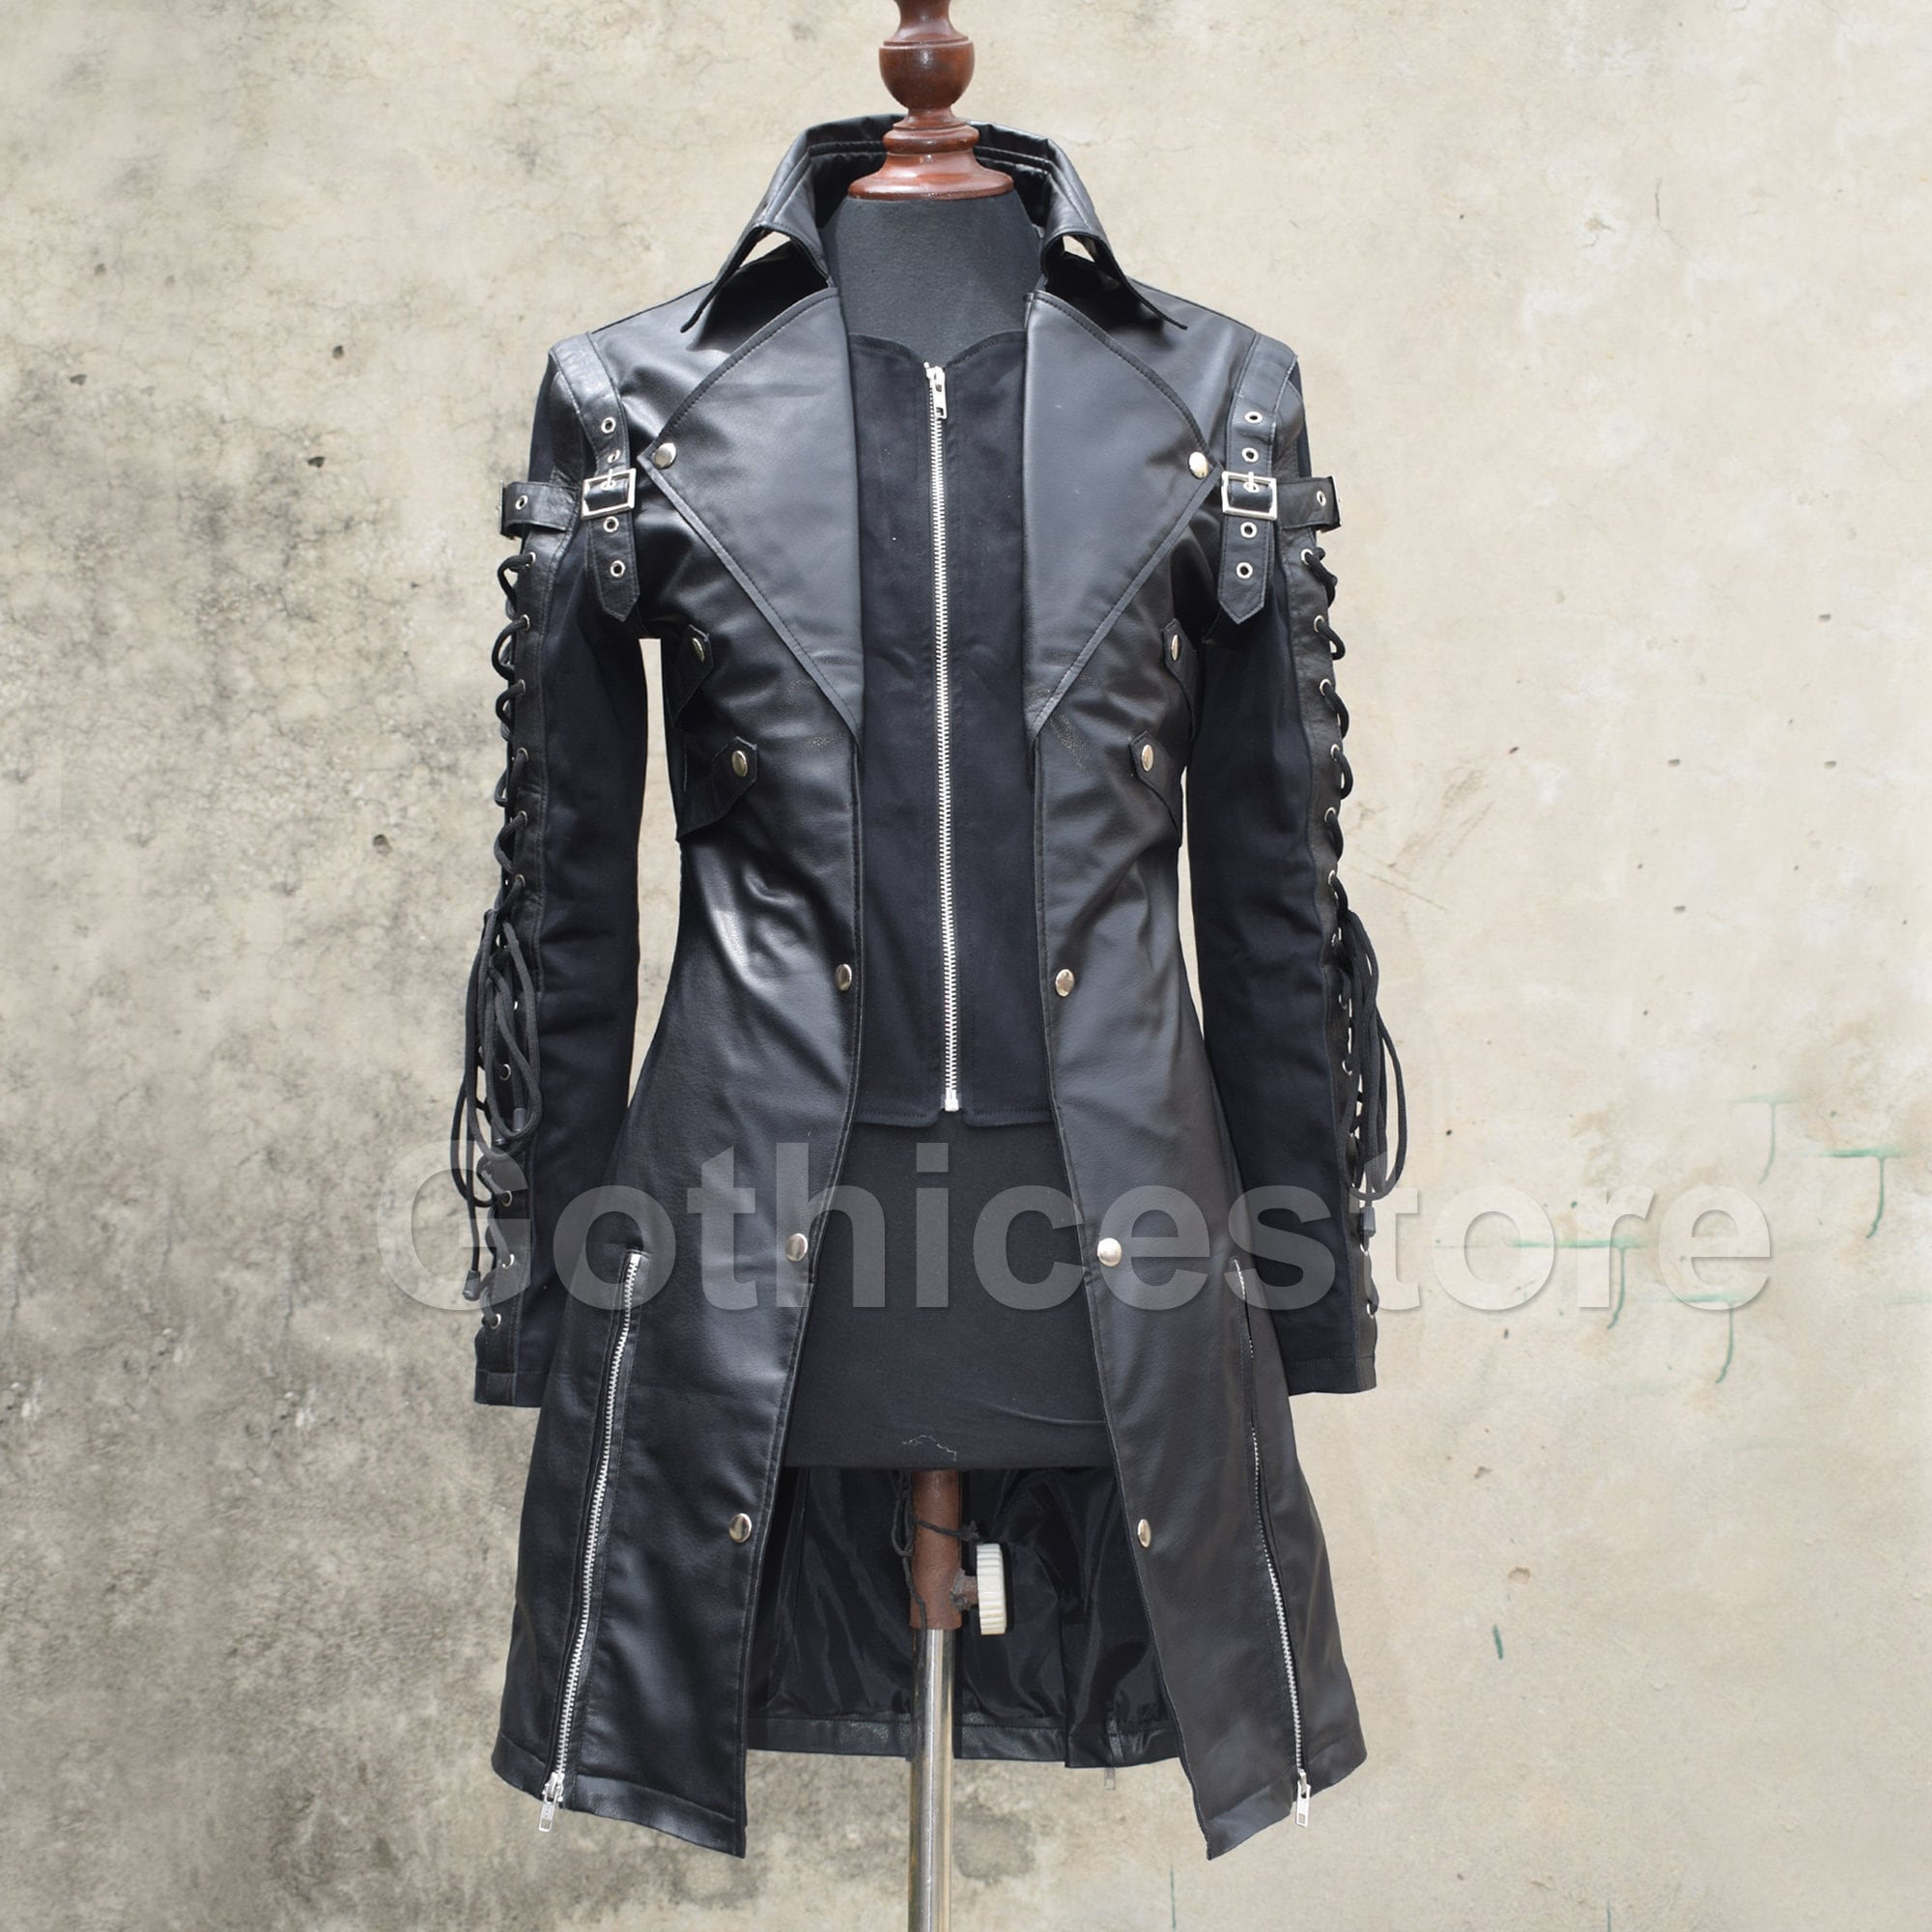 All Sizes Steampunk Gothic Men Leather Black Coat Jacket